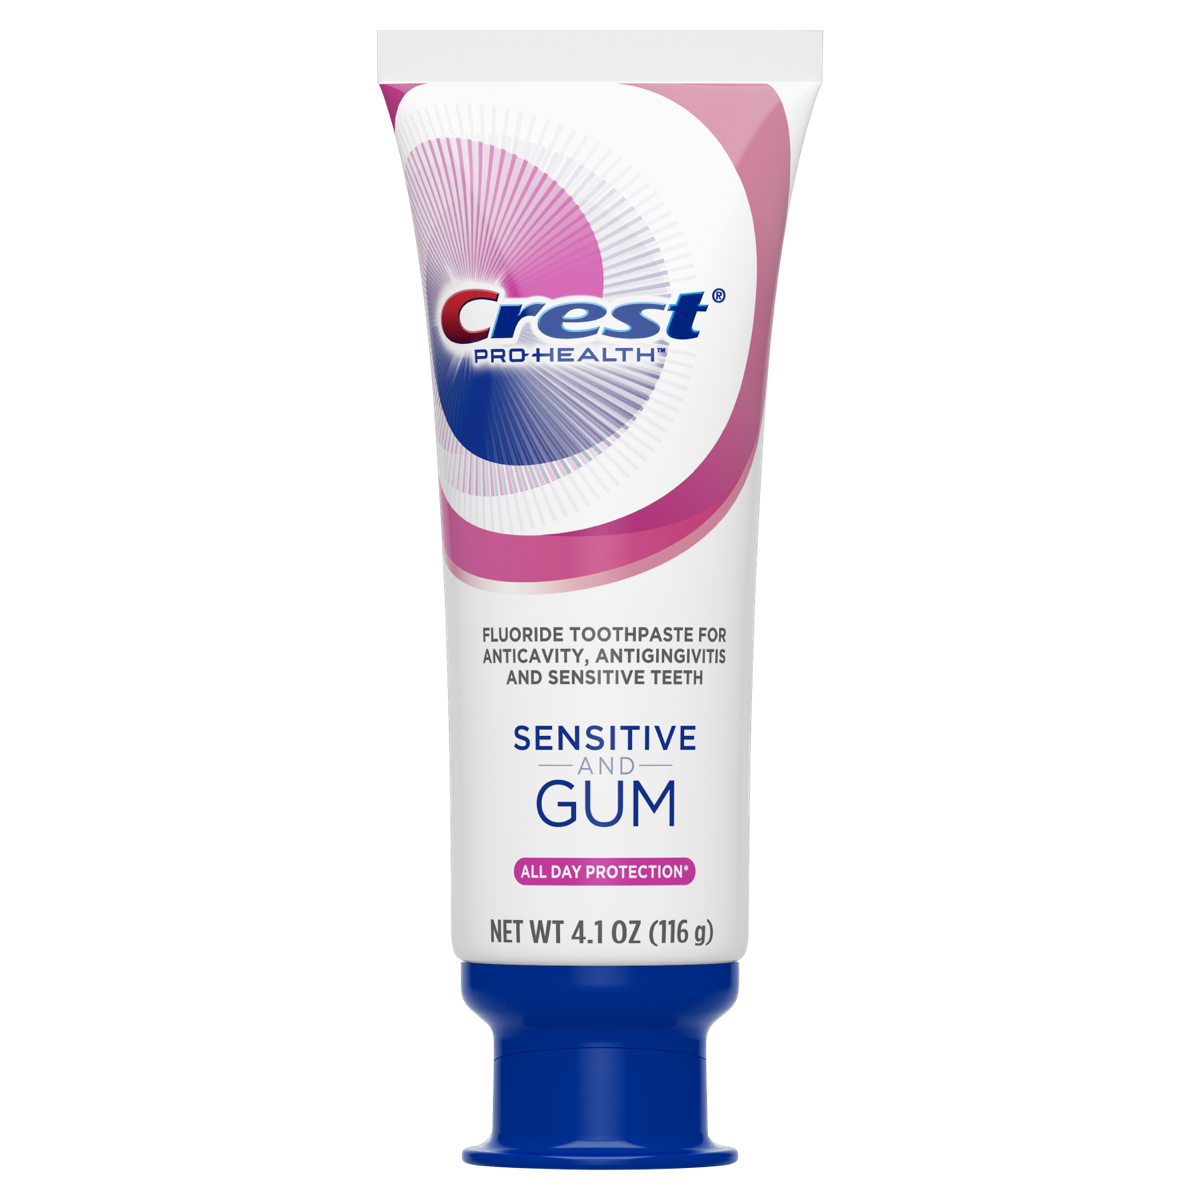 Crest Gum and Sensitivity Gentle Whitening Toothpaste